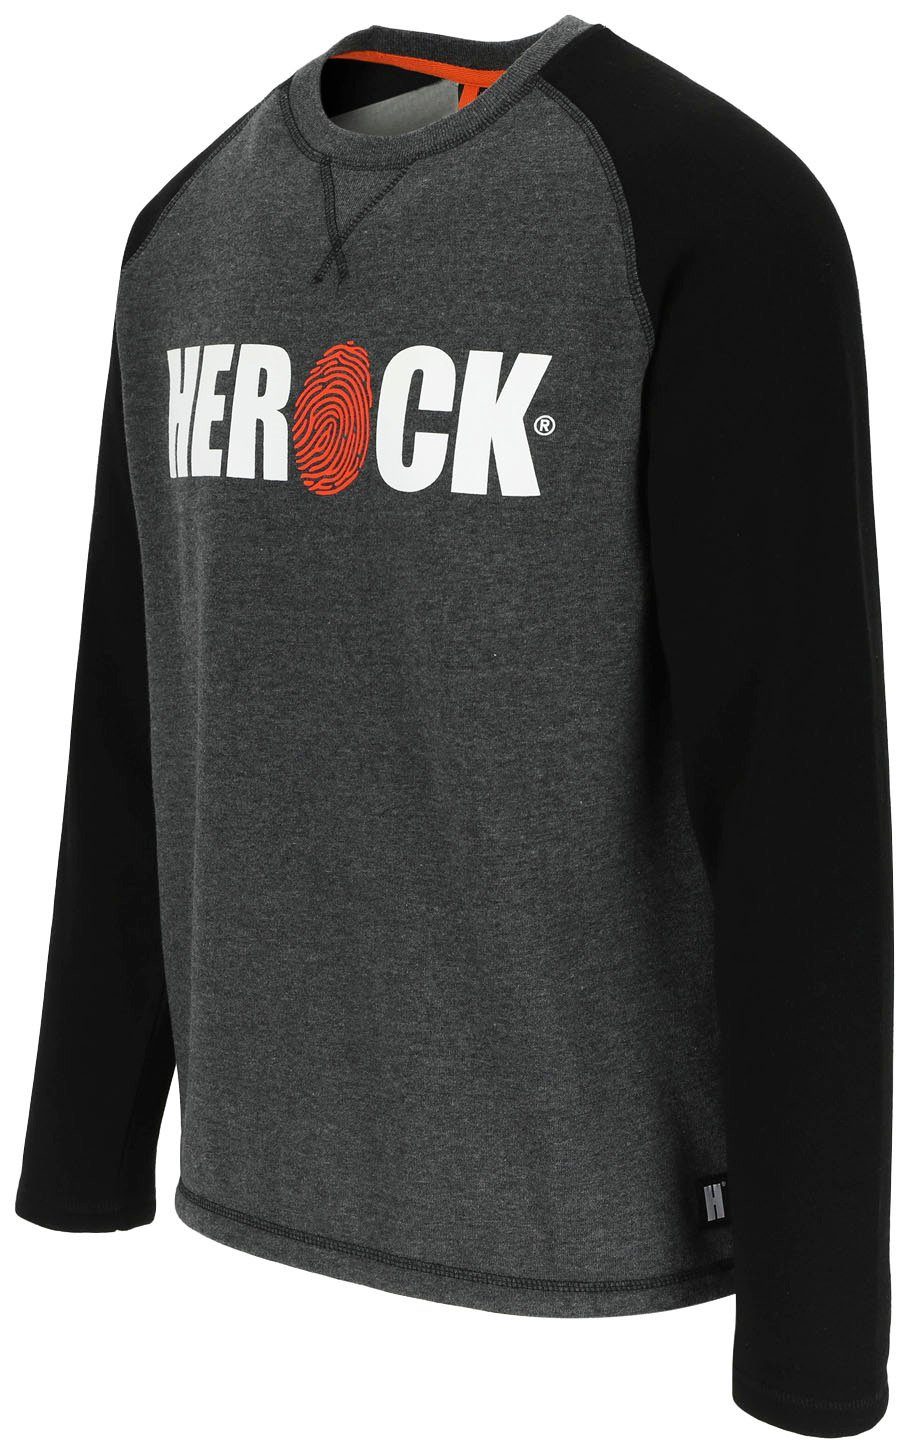 Herock Langarmshirt ROLES Sweater T-Shirt/Sweater, Schwarz/Grau 2-Farbig Aufdruck, Rundhals, Herock®- mit